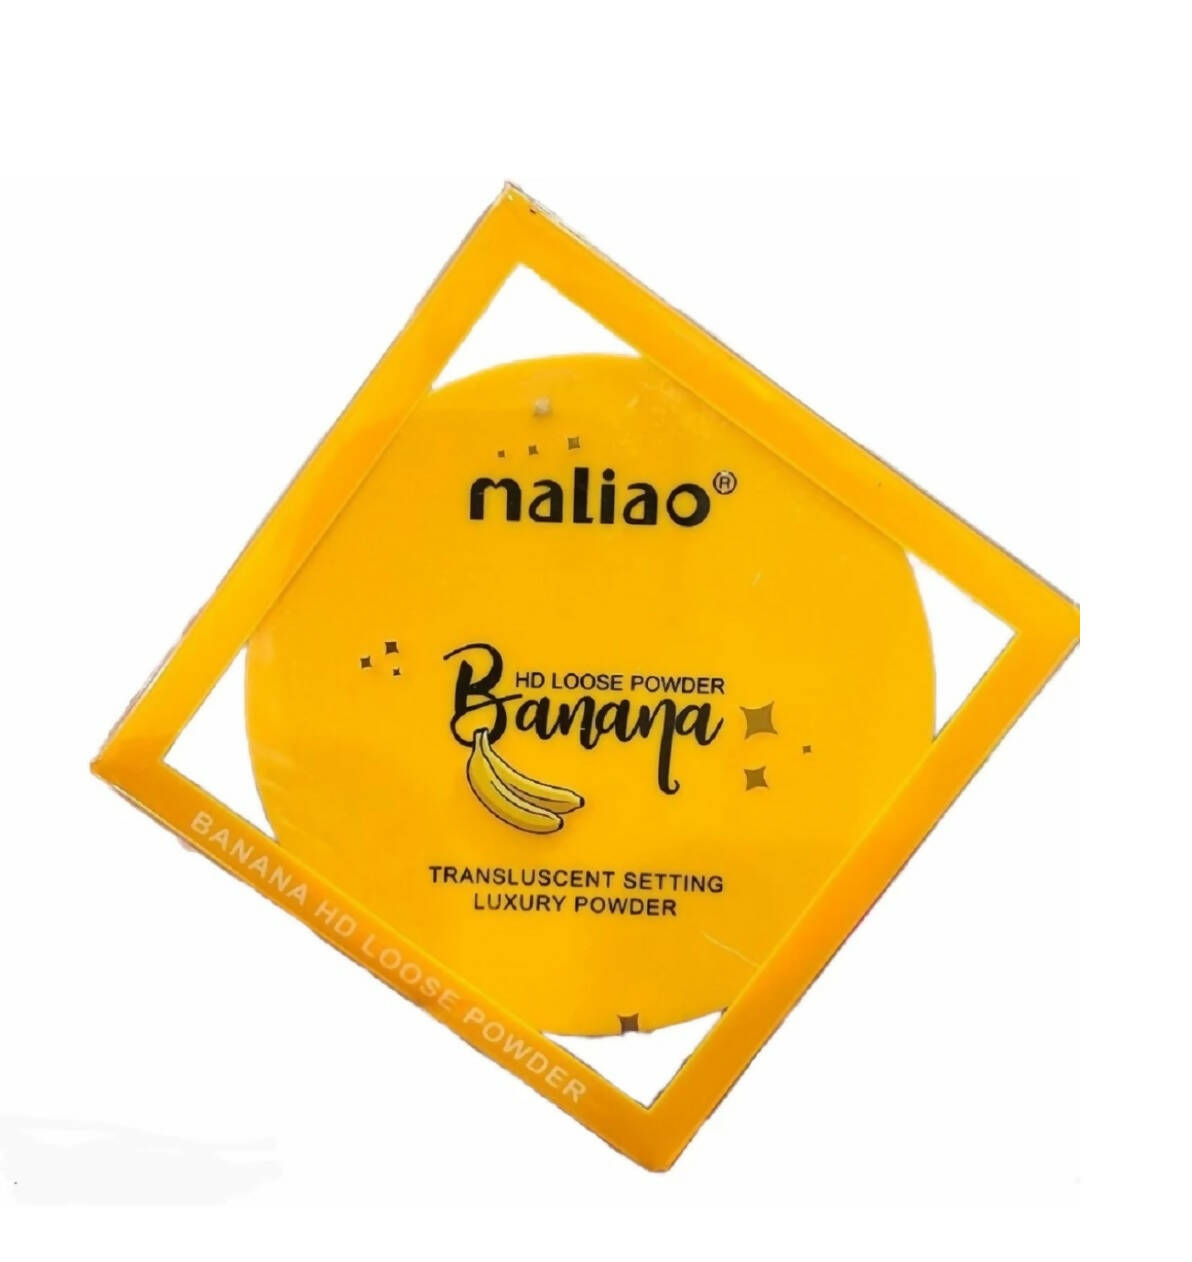 Maliao Translucent Setting HD Banana Luxury Loose Powder